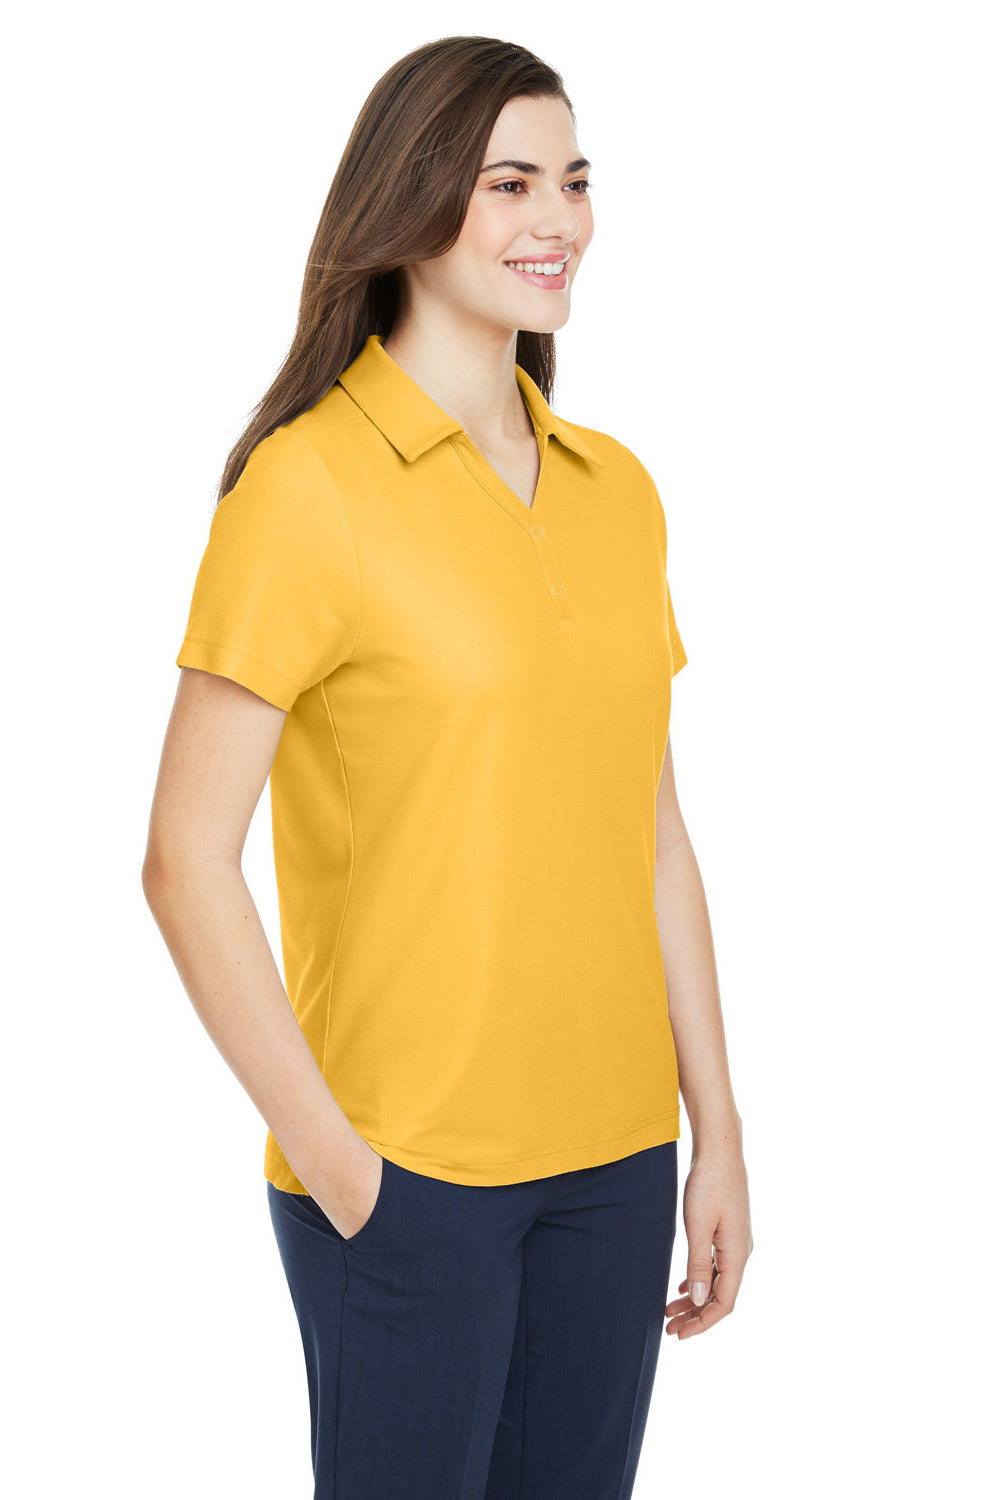 Core 365 CE112W Womens Fusion ChromaSoft Performance Moisture Wicking Pique Short Sleeve Polo Shirt Campus Gold 3Q